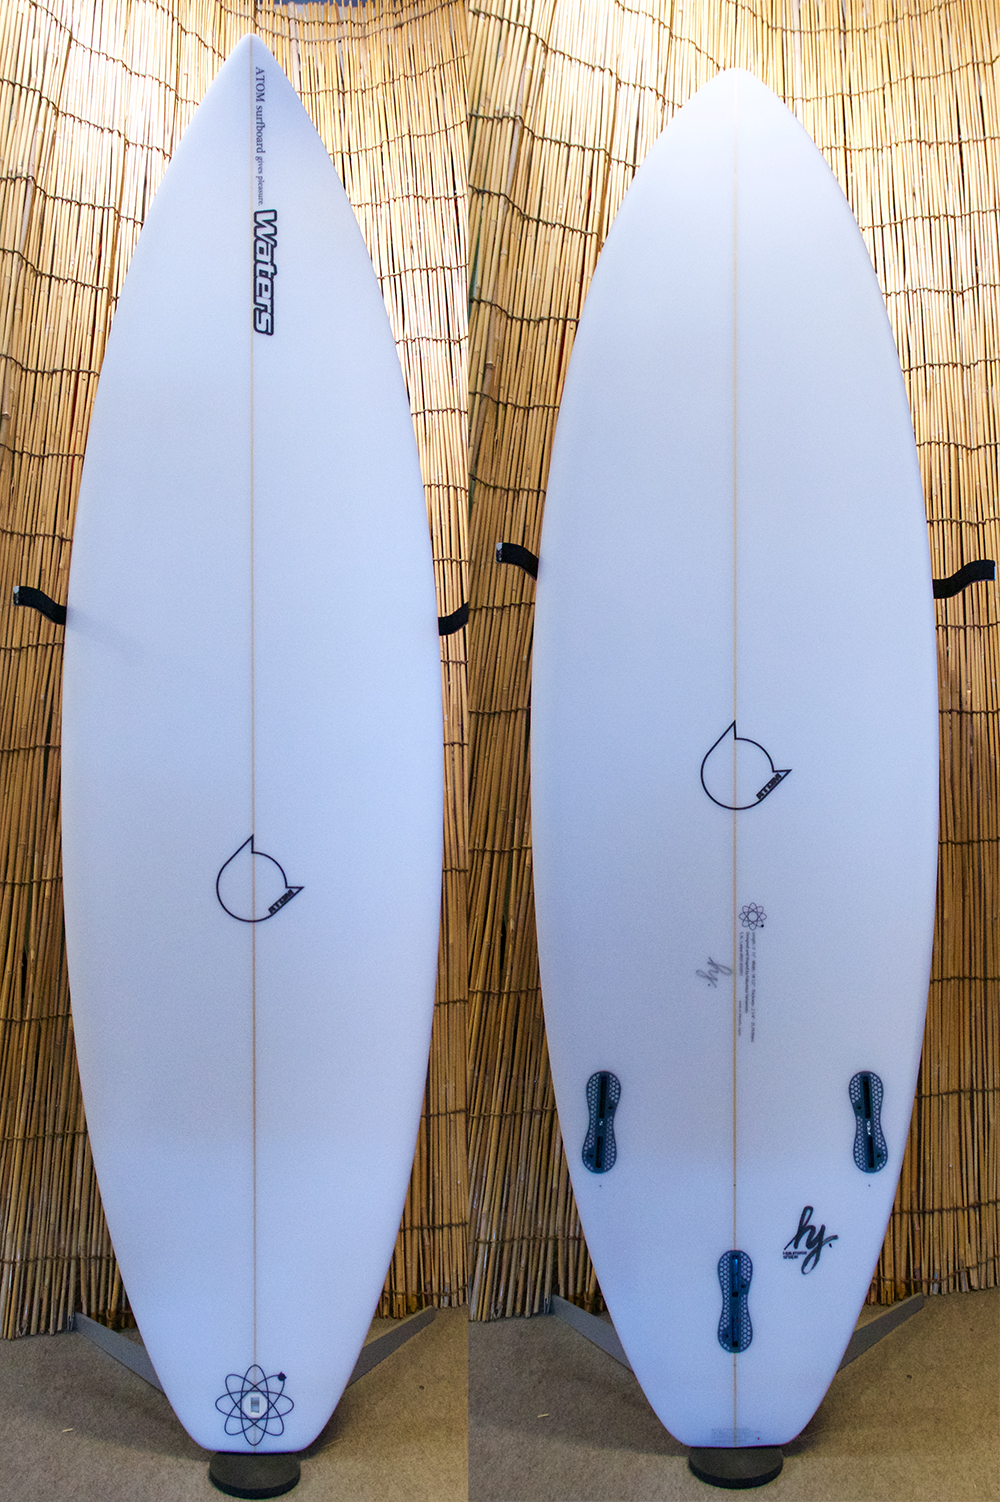 ATOM Surfboard Latest2.0 model